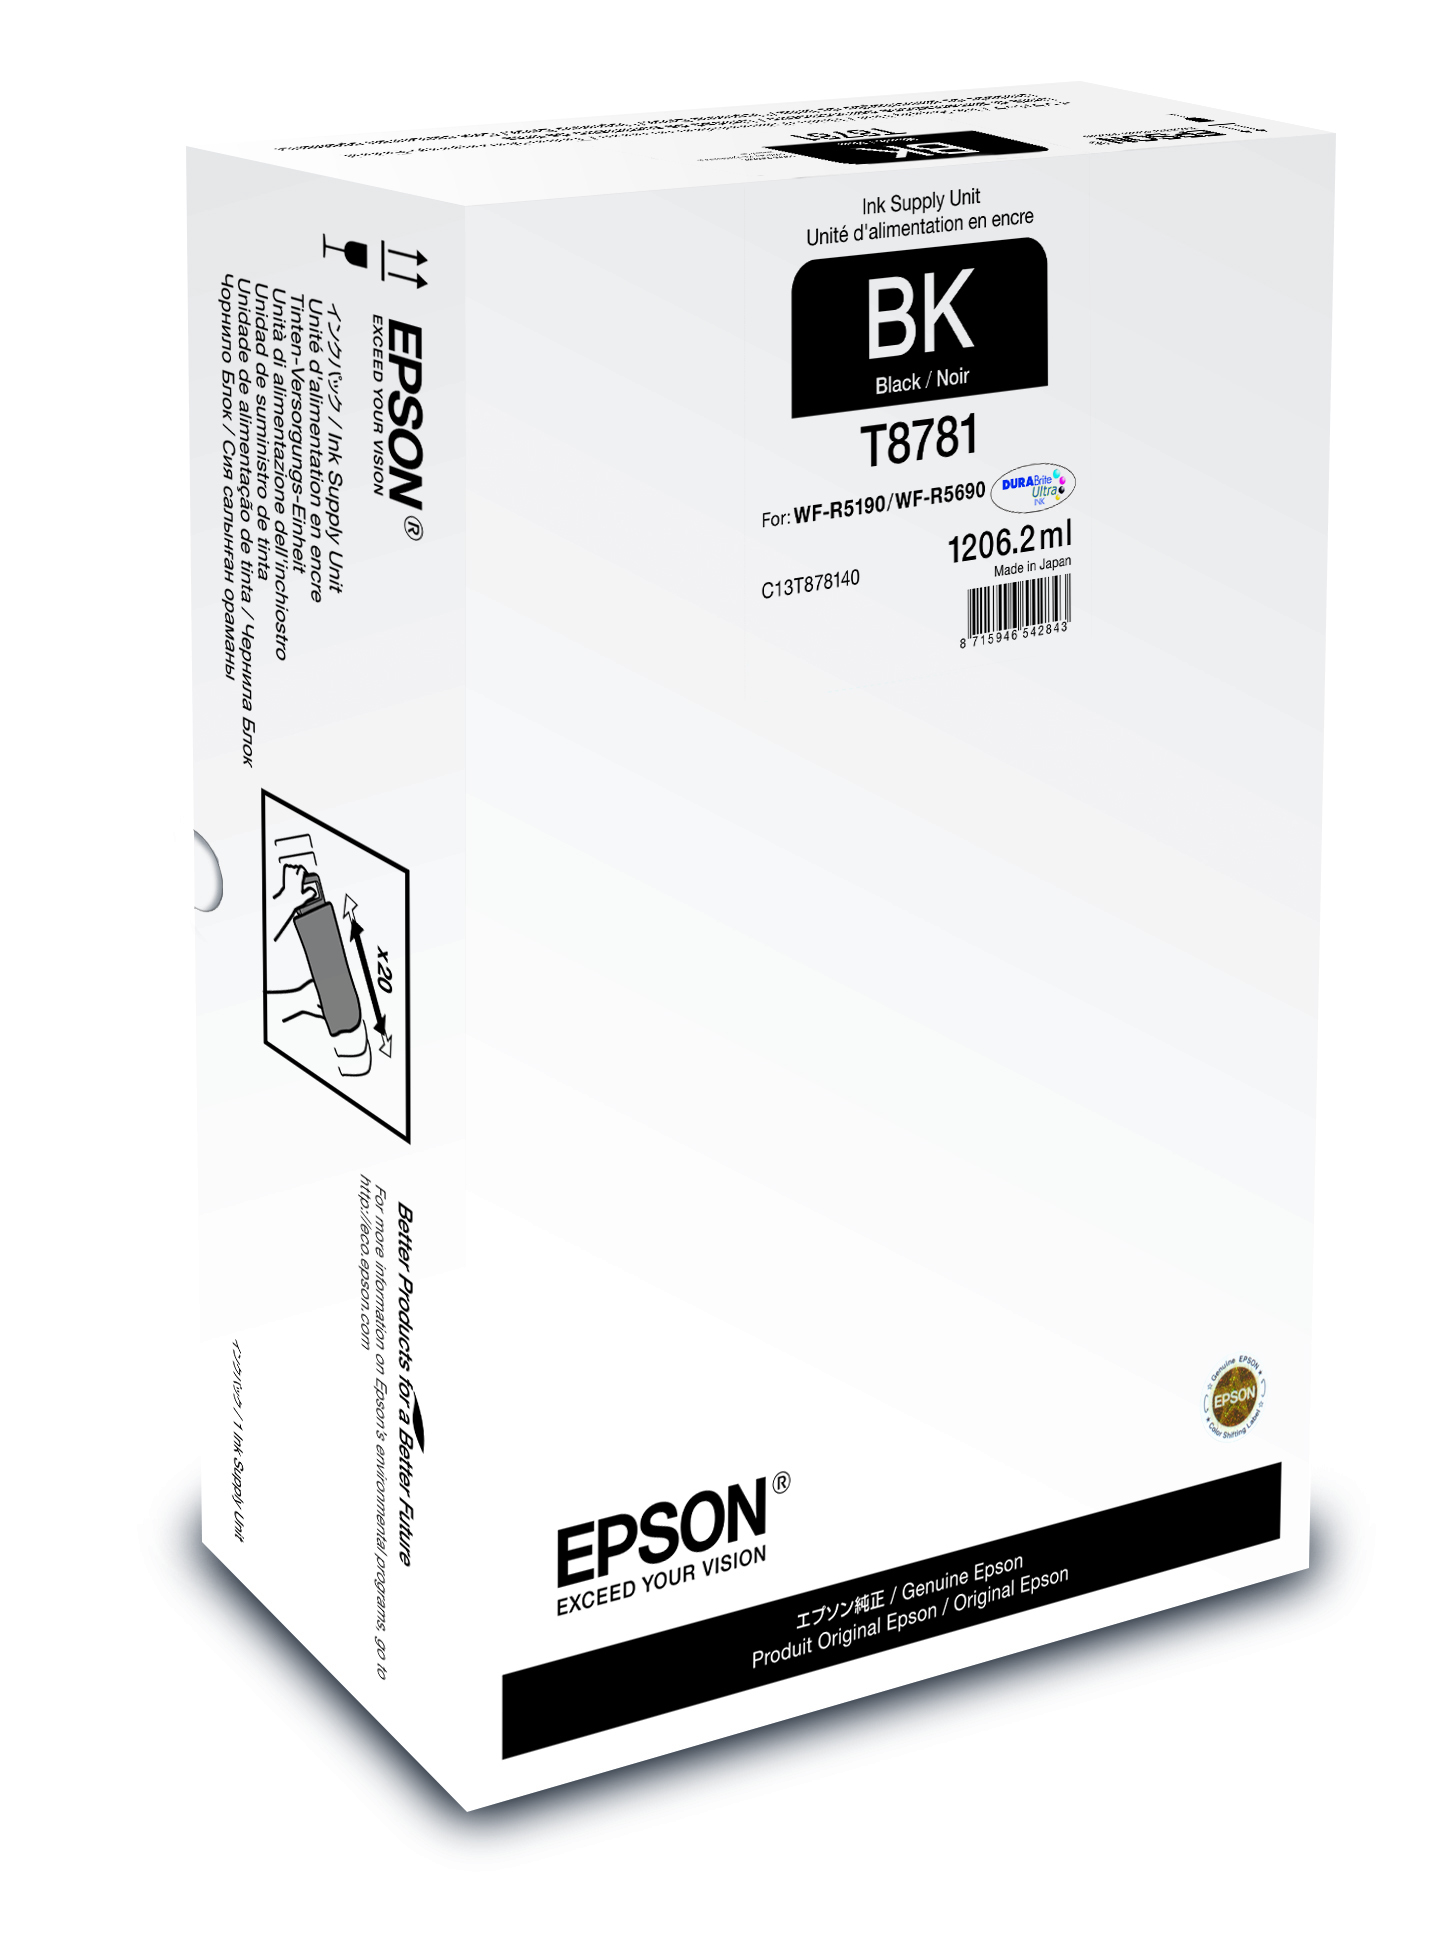 Epson Black XXL Ink Supply Unit single pack / zwart